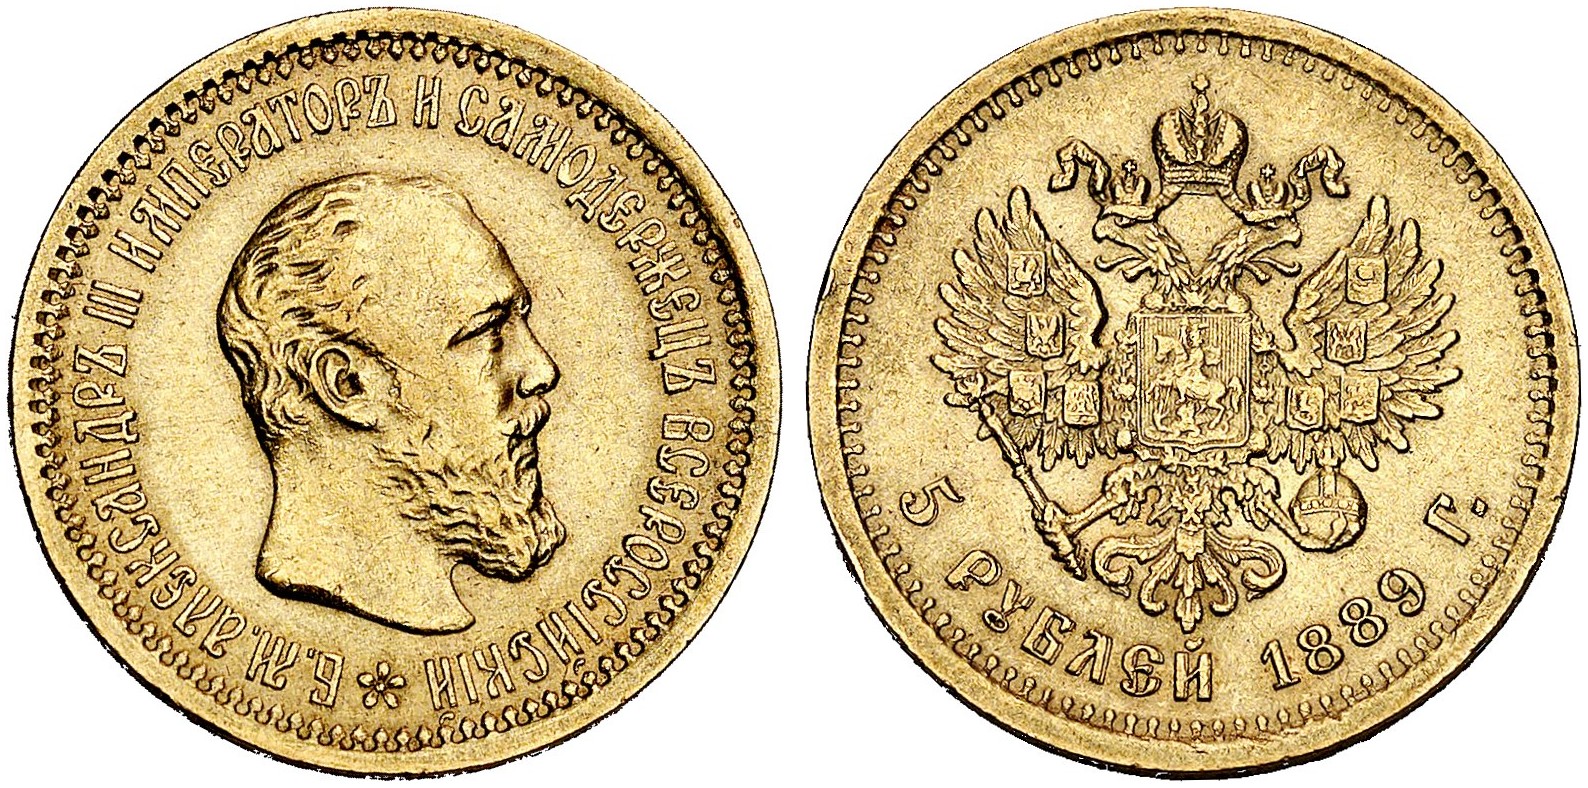 Цена монеты 5 рублей золотая. Монета 5 рублей 1893 года. Монеты России 1893 года золото. 100 Рублей 1892 года.